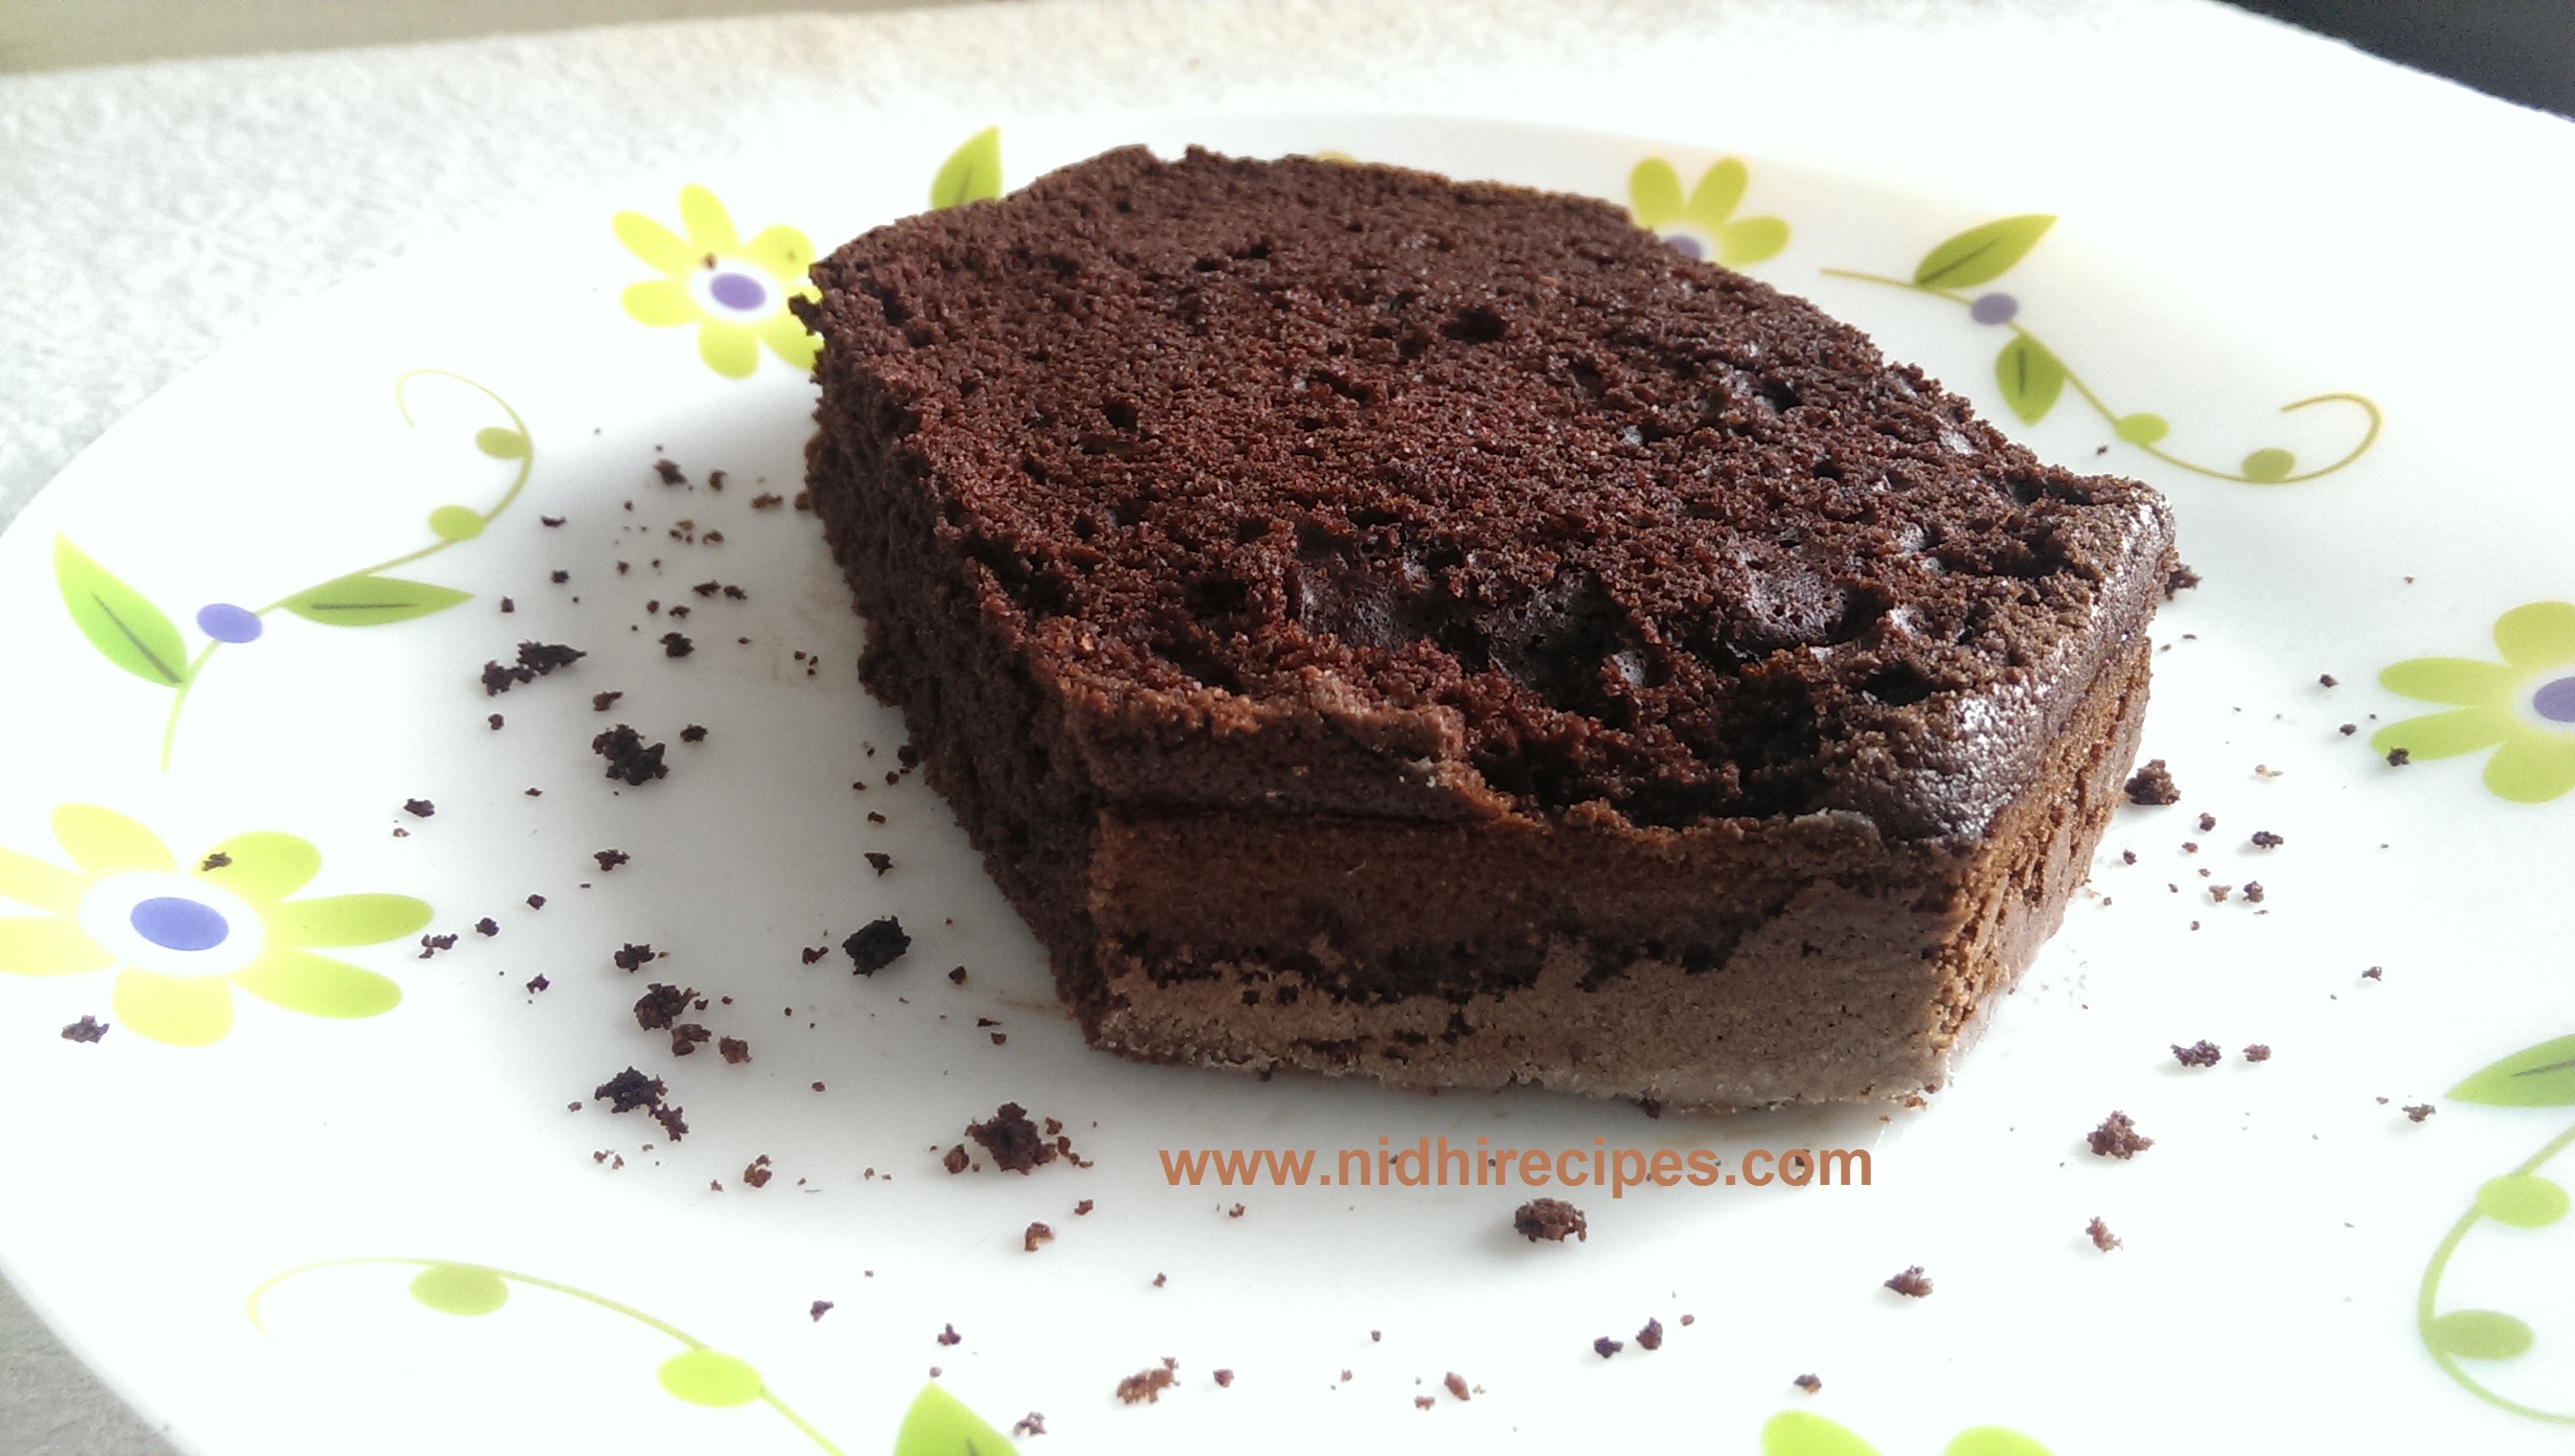 Simple chocolate cake // www.nidhirecipes.com